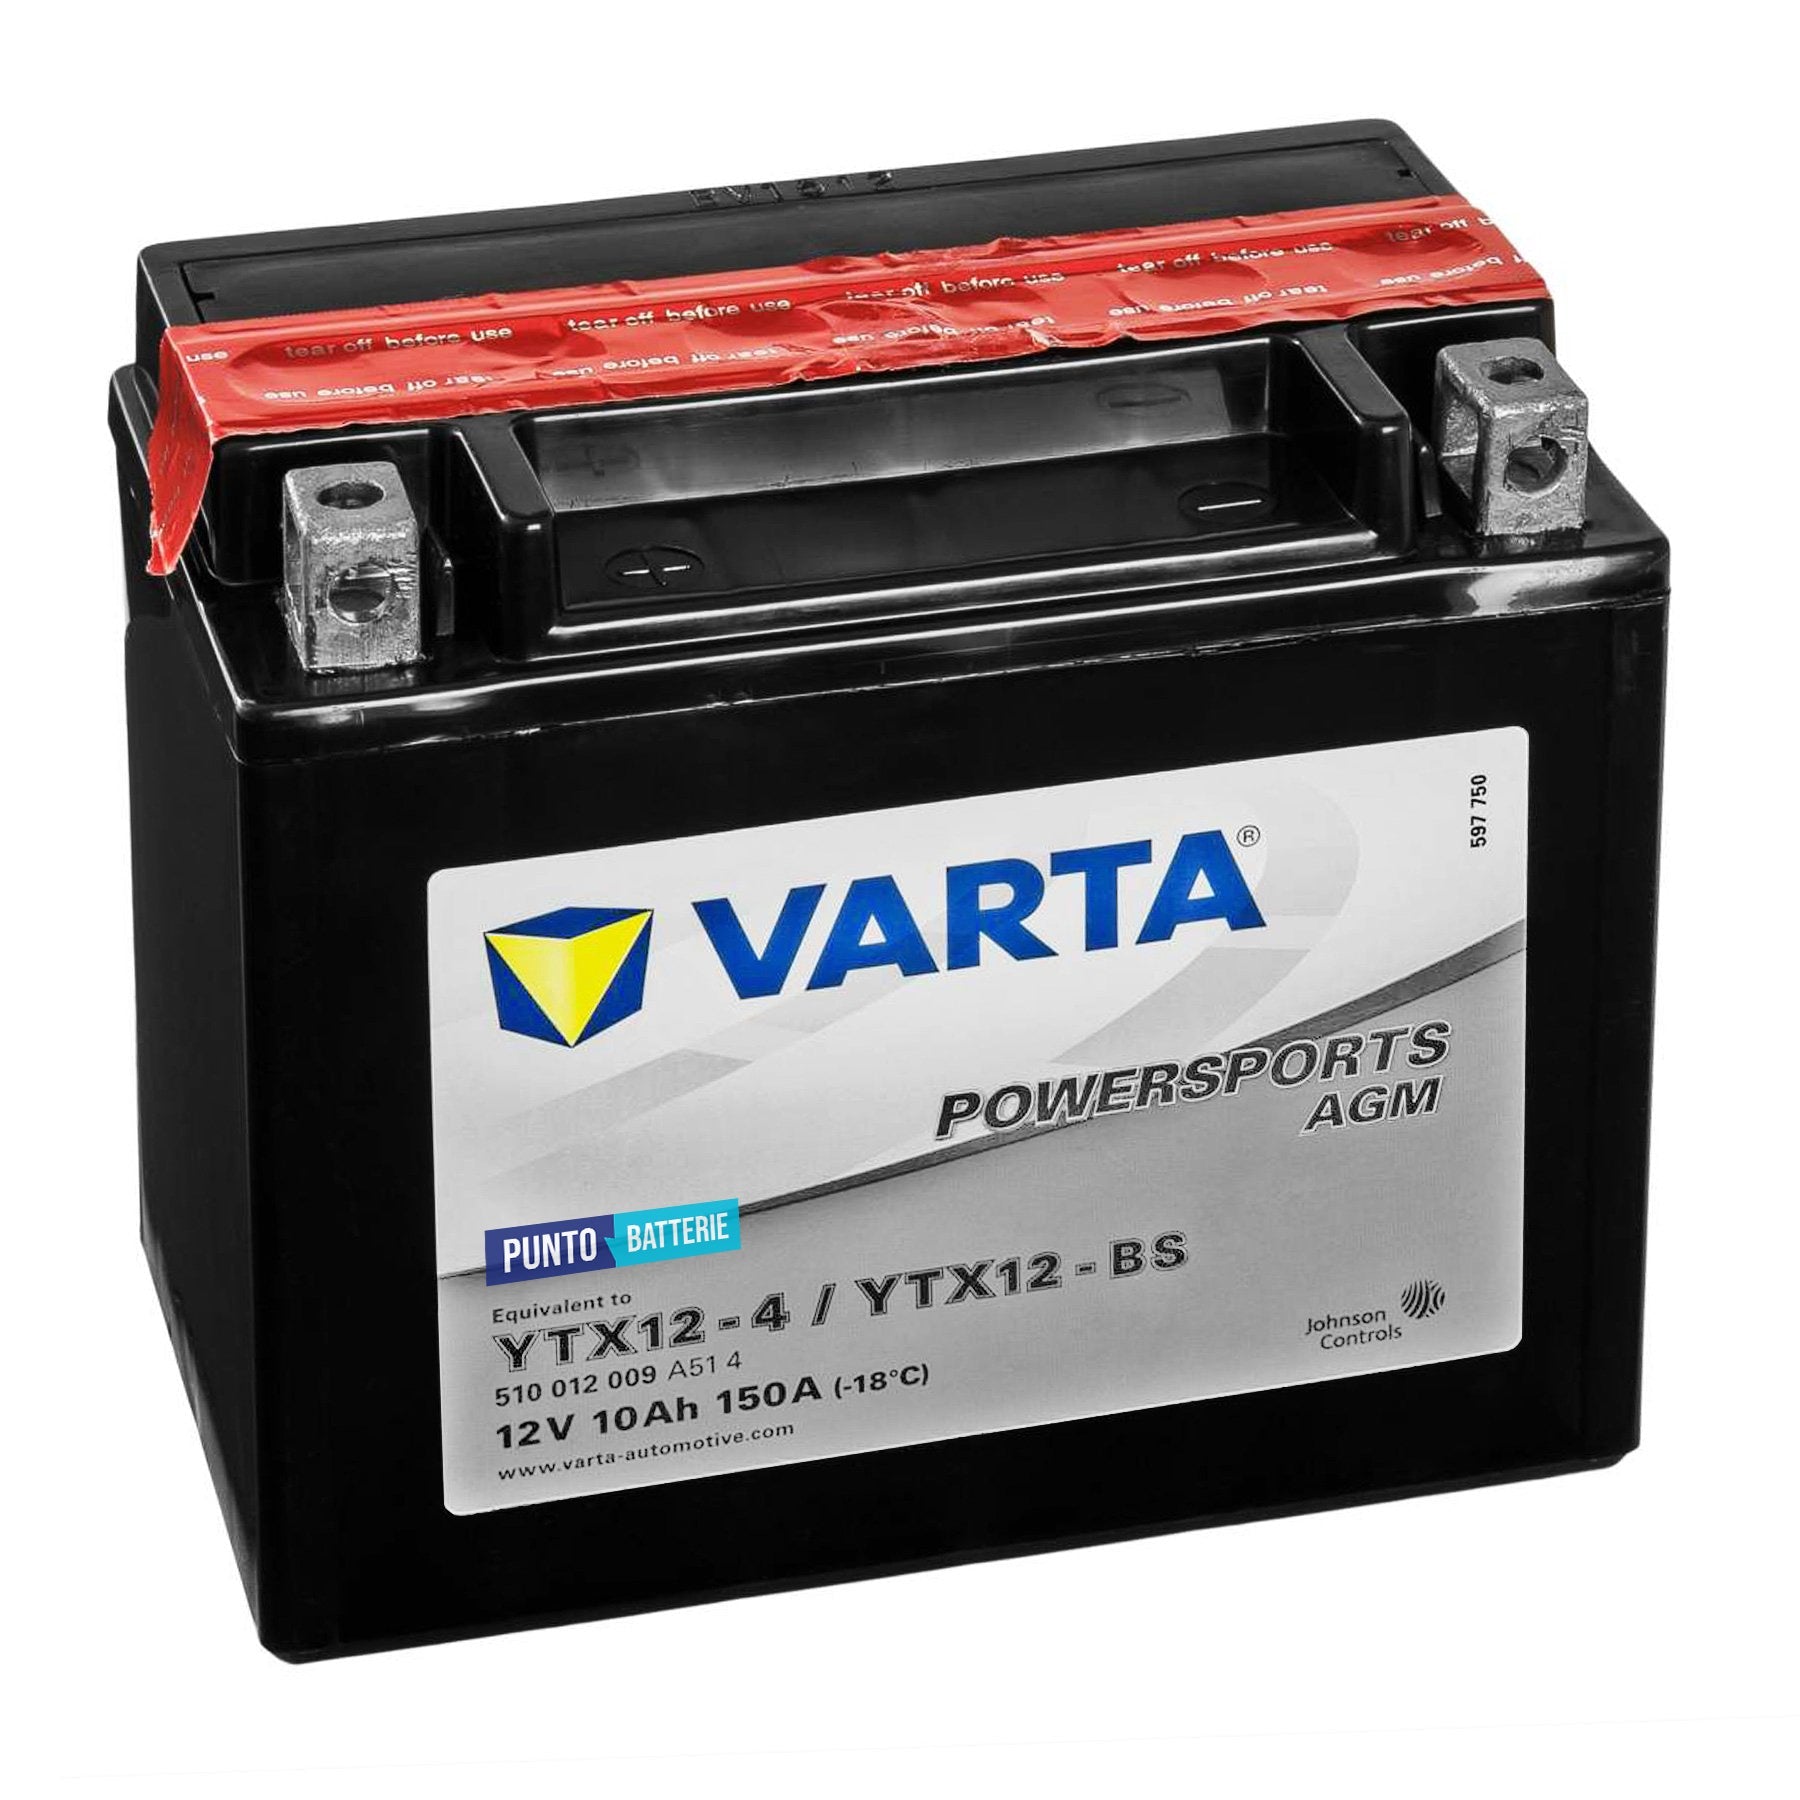 Batteria originale Varta Powersport AGM YTX12-4, dimensioni 152 x 88 x 131, polo positivo a sinistra, 12 volt, 10 amperora, 150 ampere. Batteria per moto, scooter e powersport.